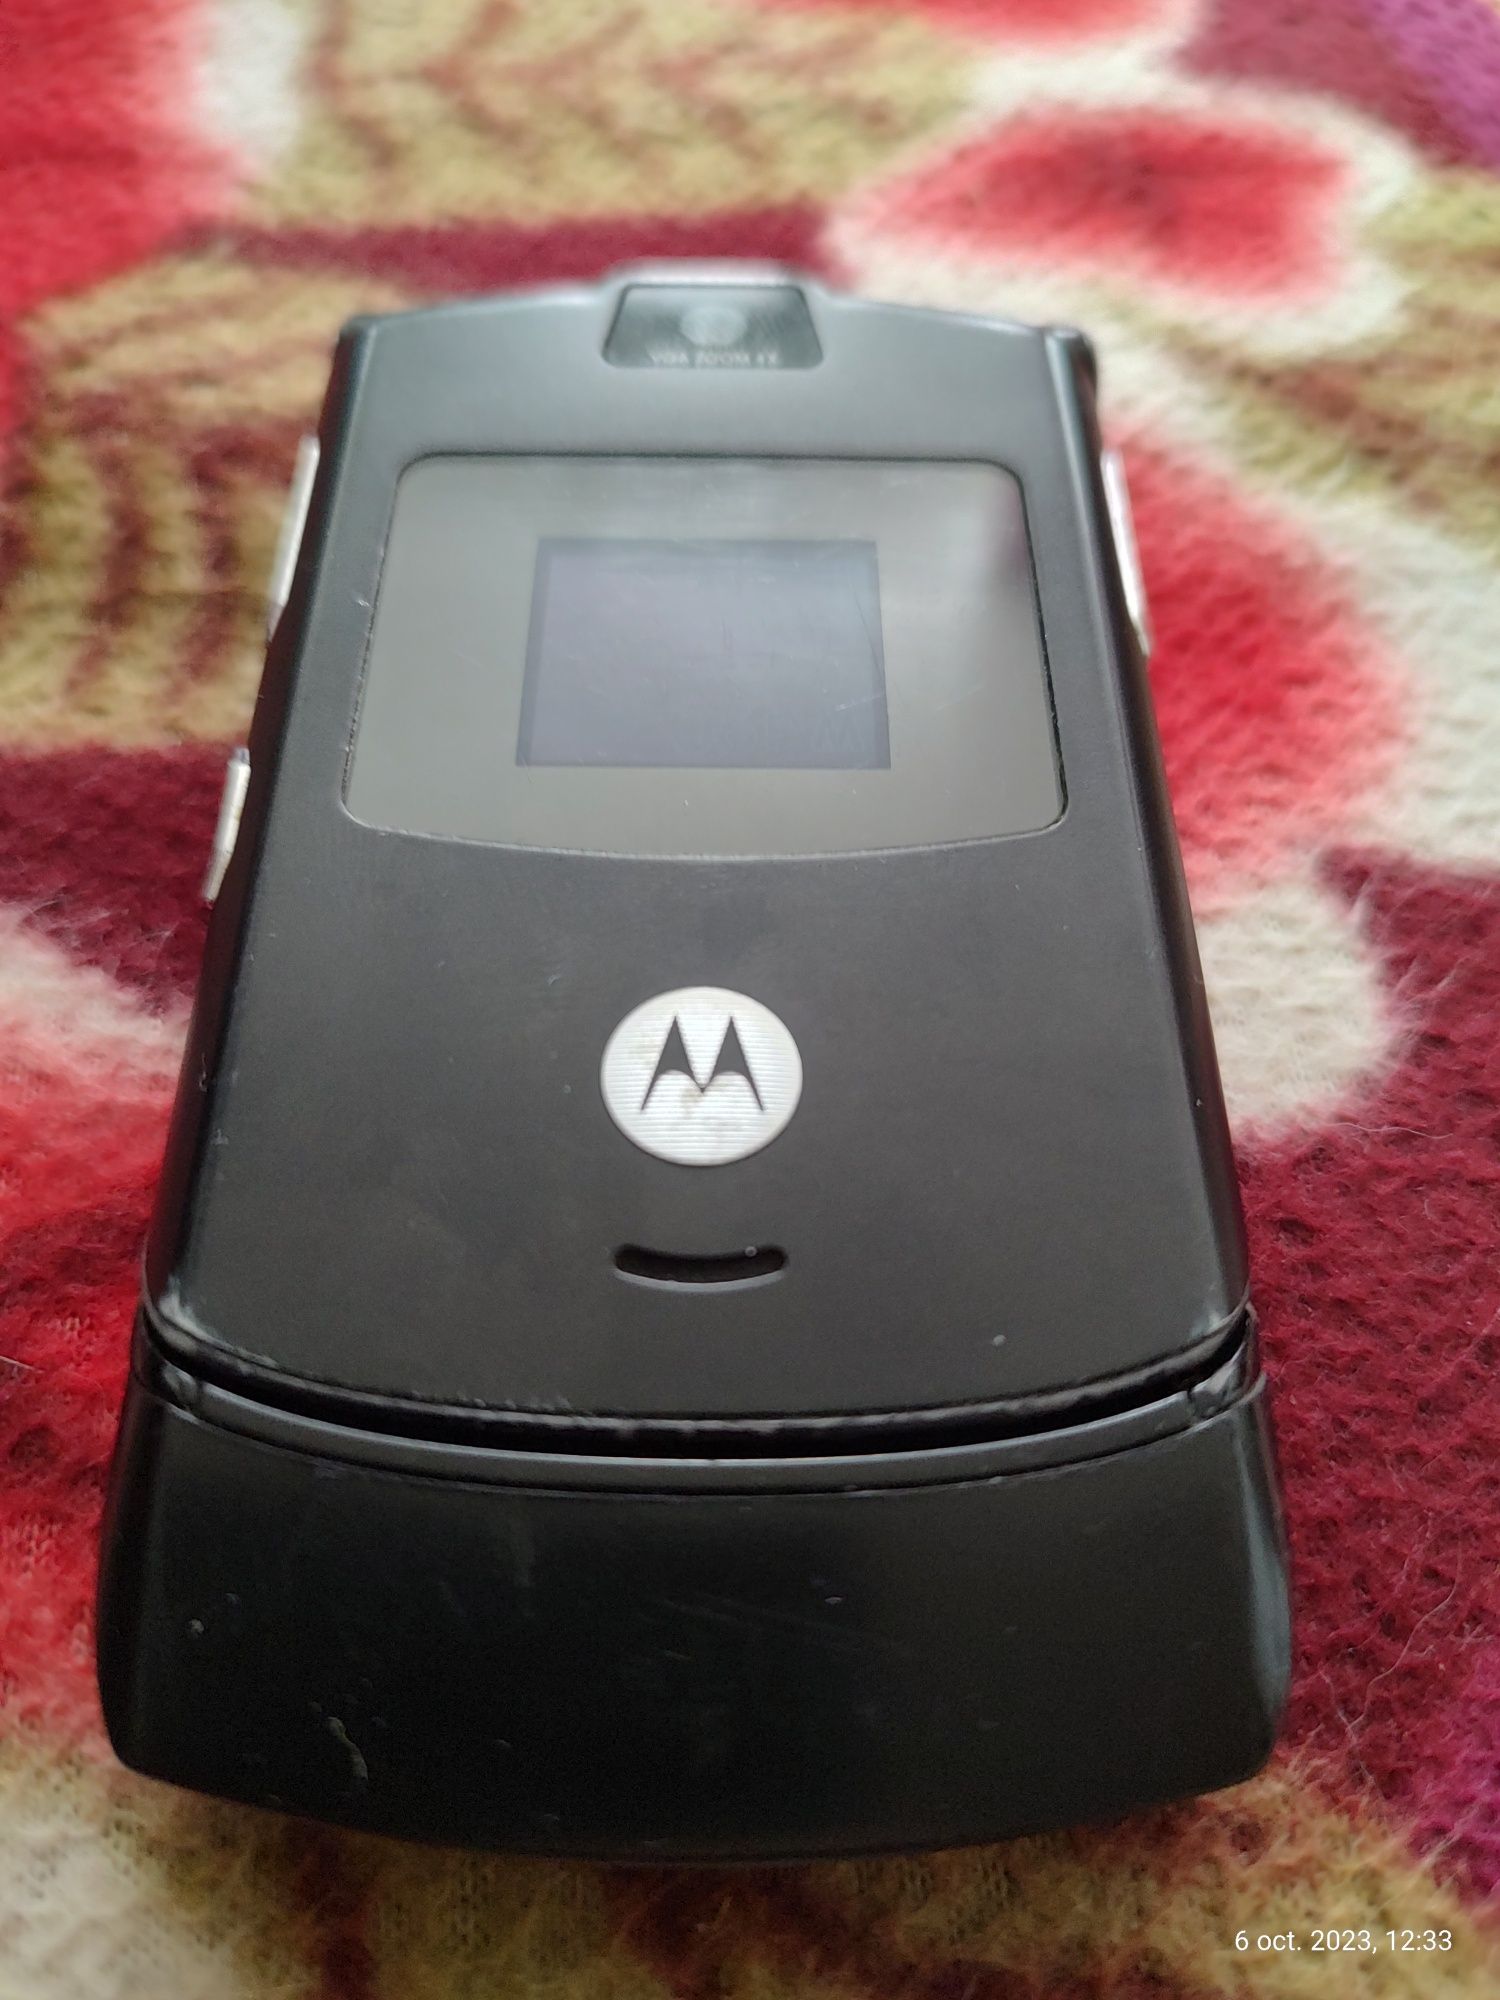 Motorola RAZR V3 liber rețea.